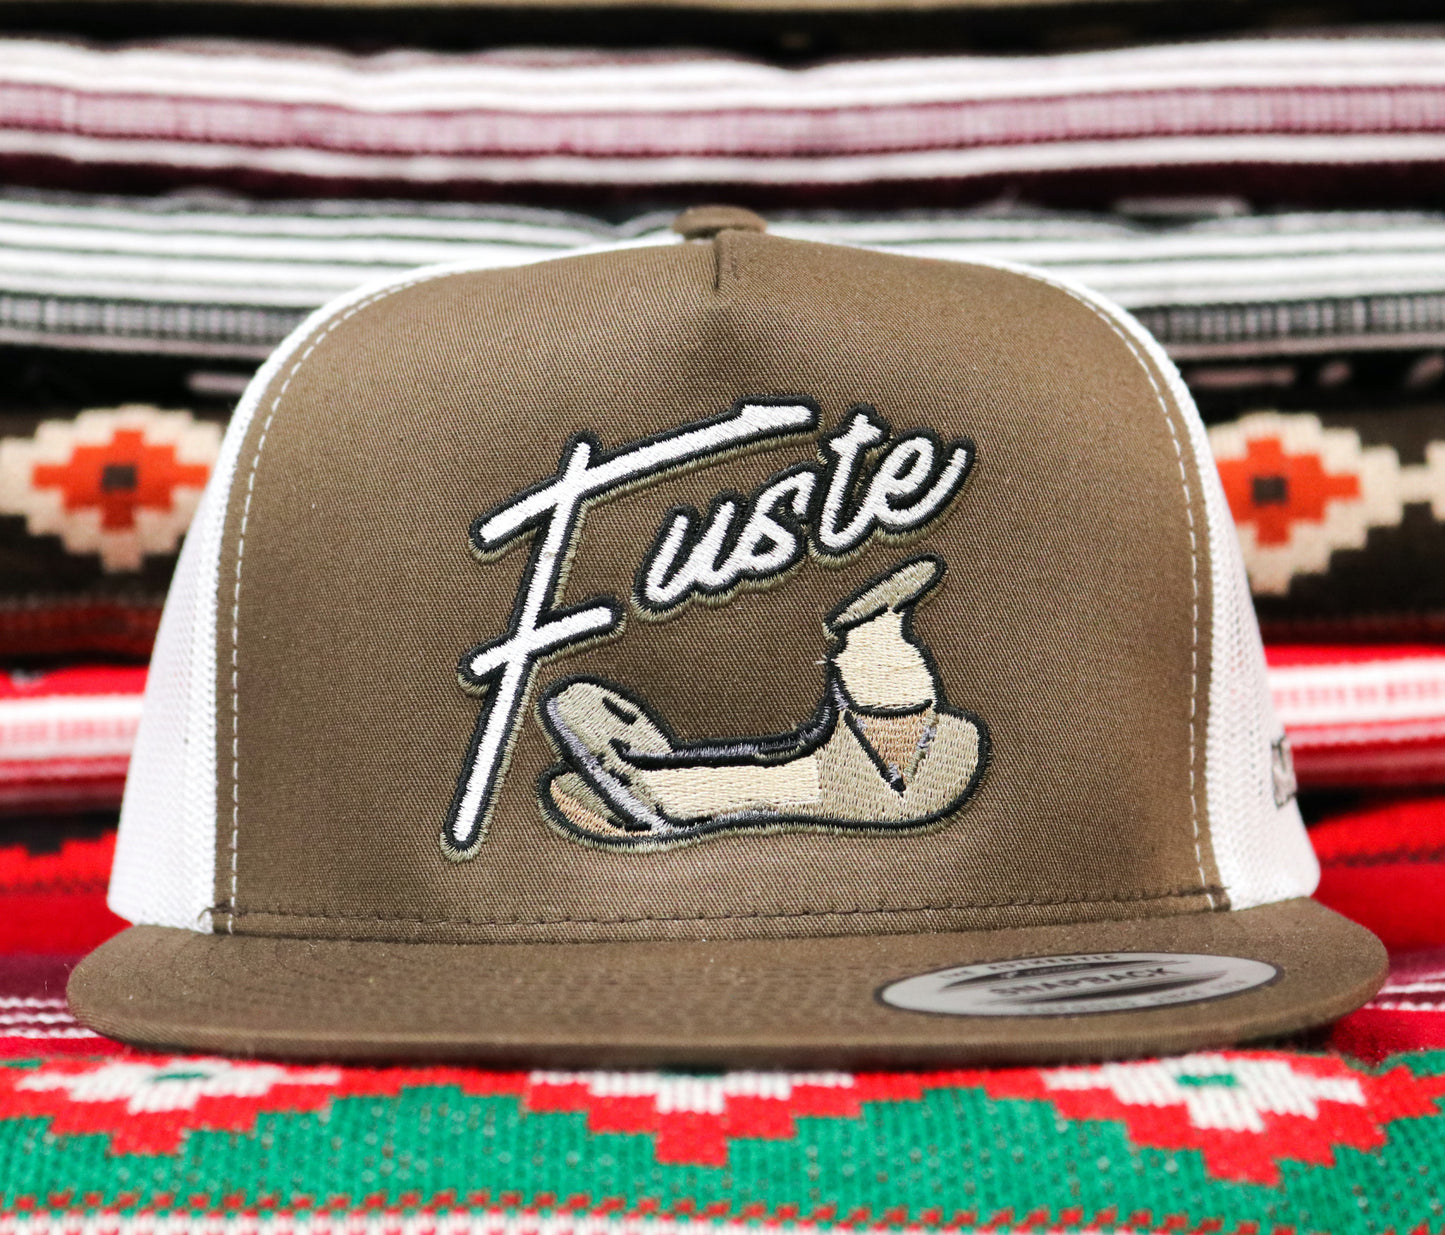 Brown "Fuste" Original Trucker Hat